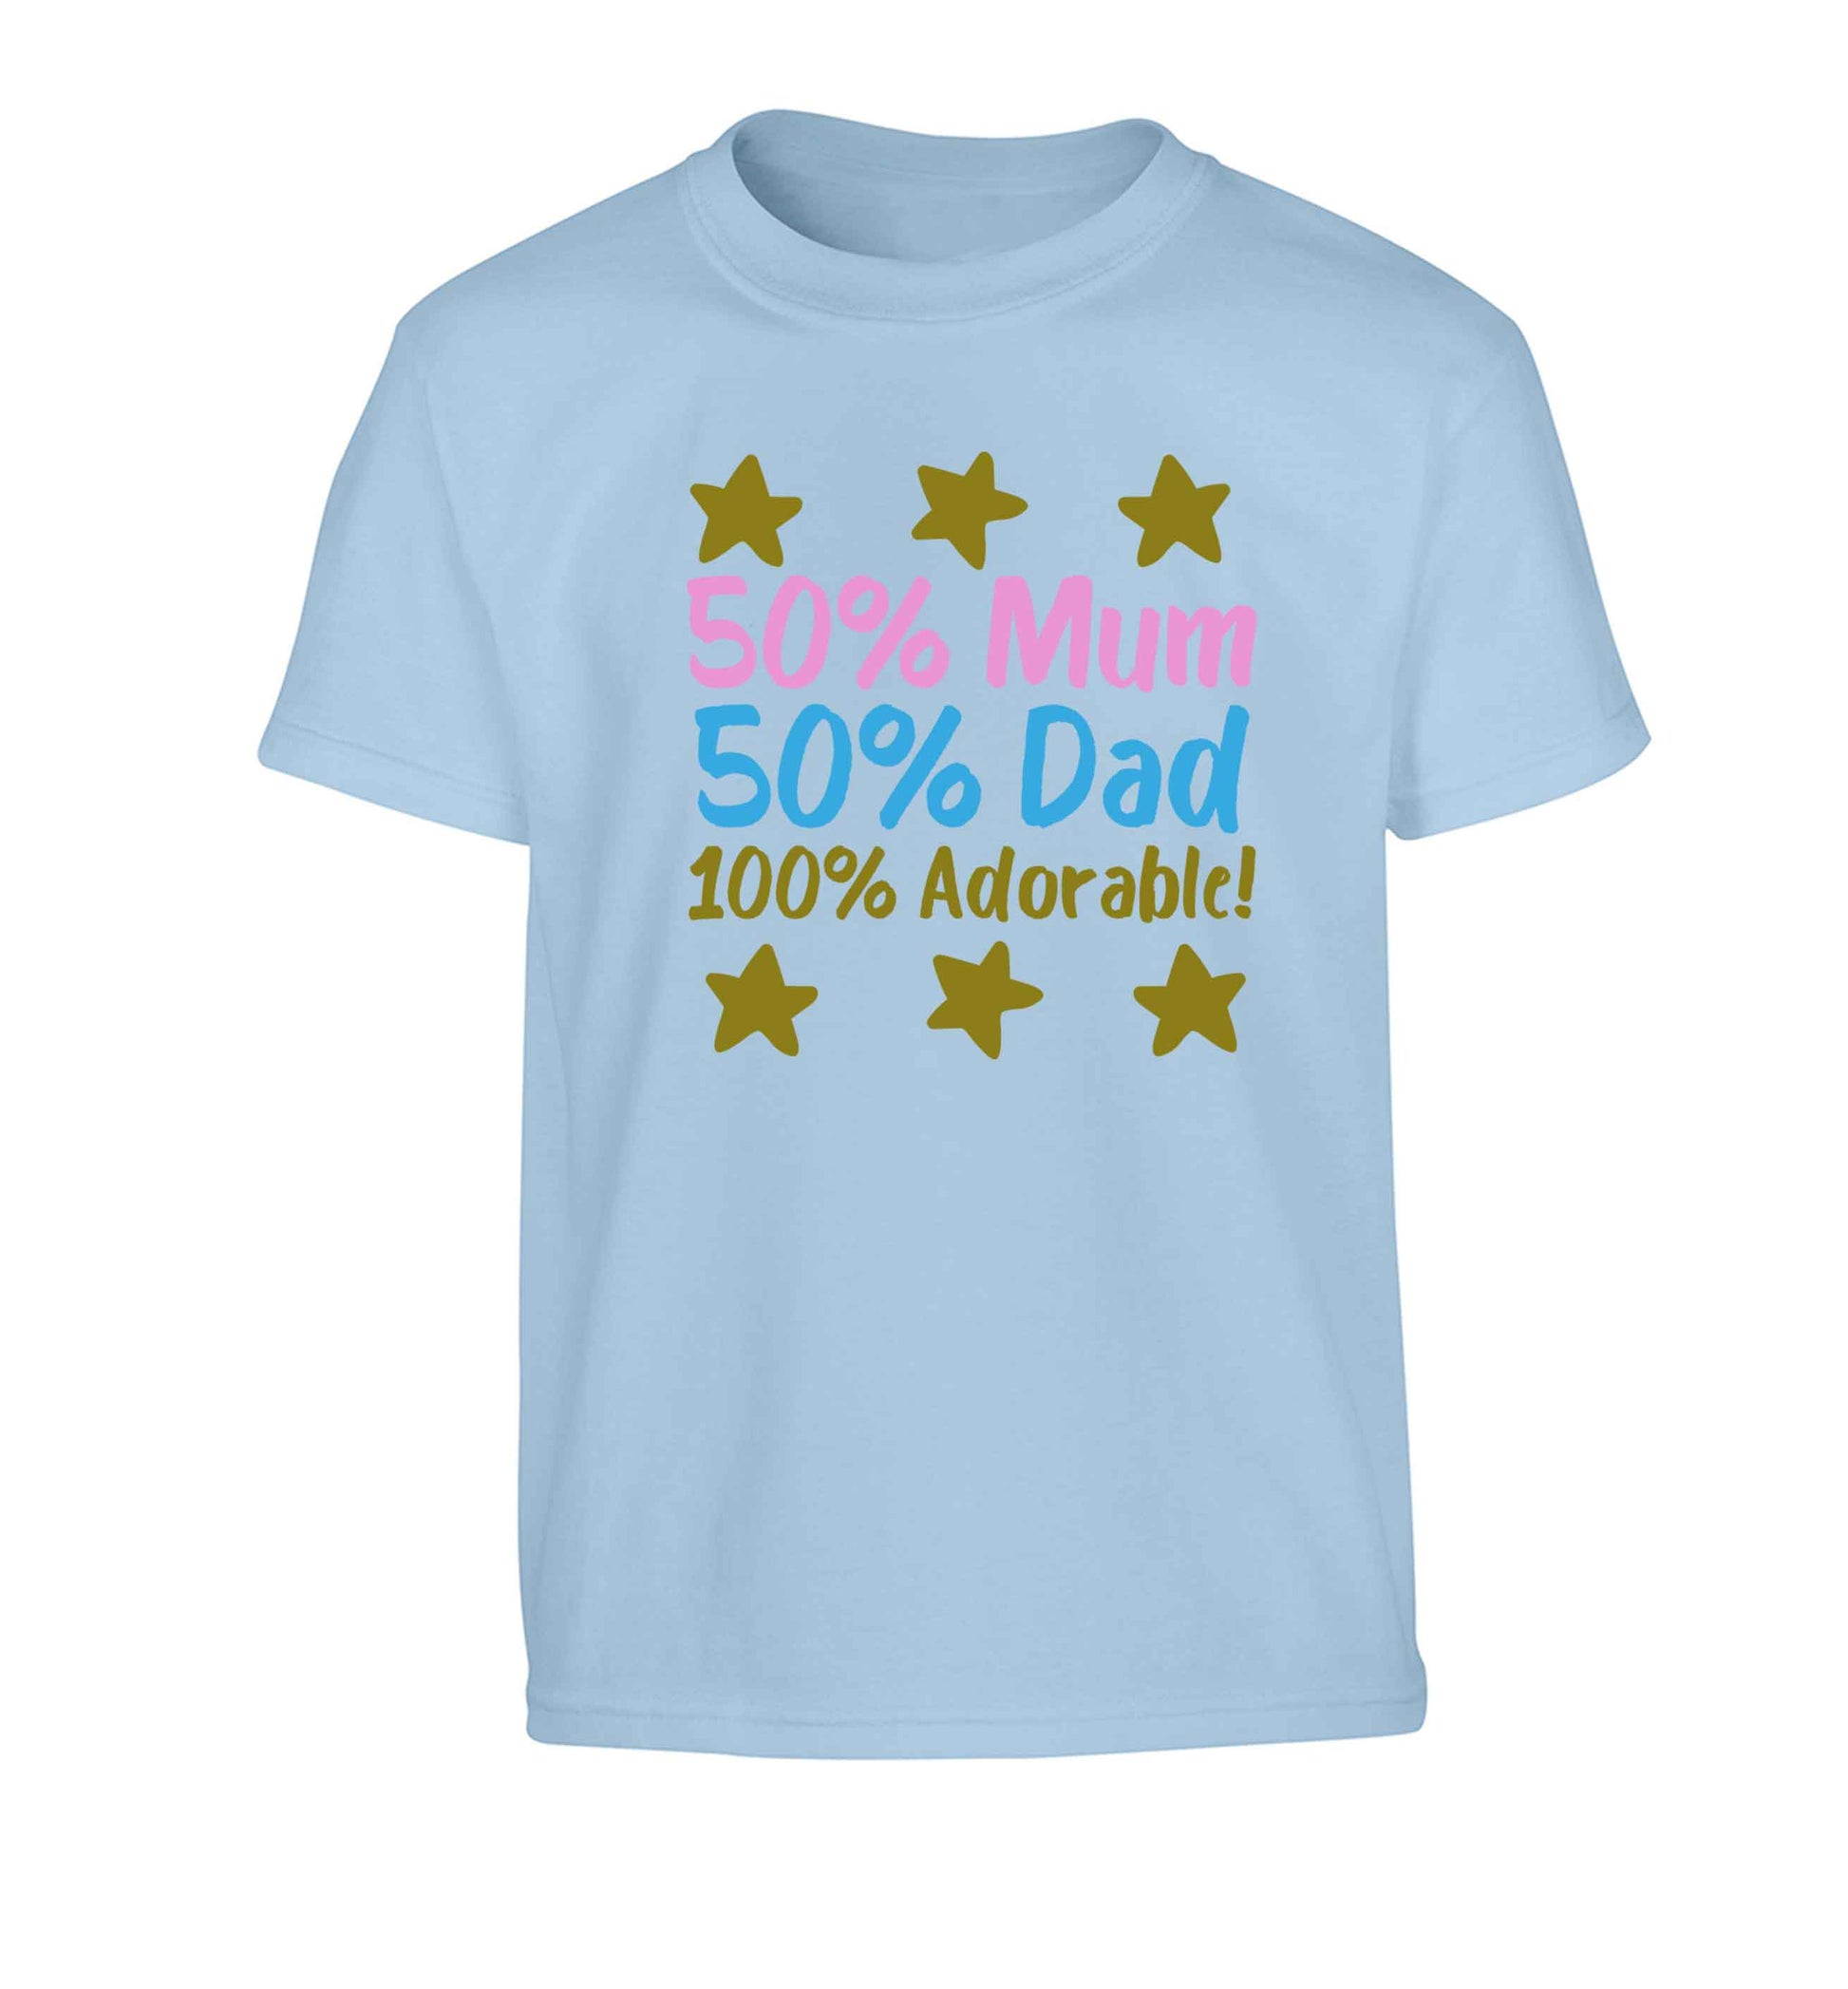 50% mum 50% dad 100% adorable Children's light blue Tshirt 12-13 Years